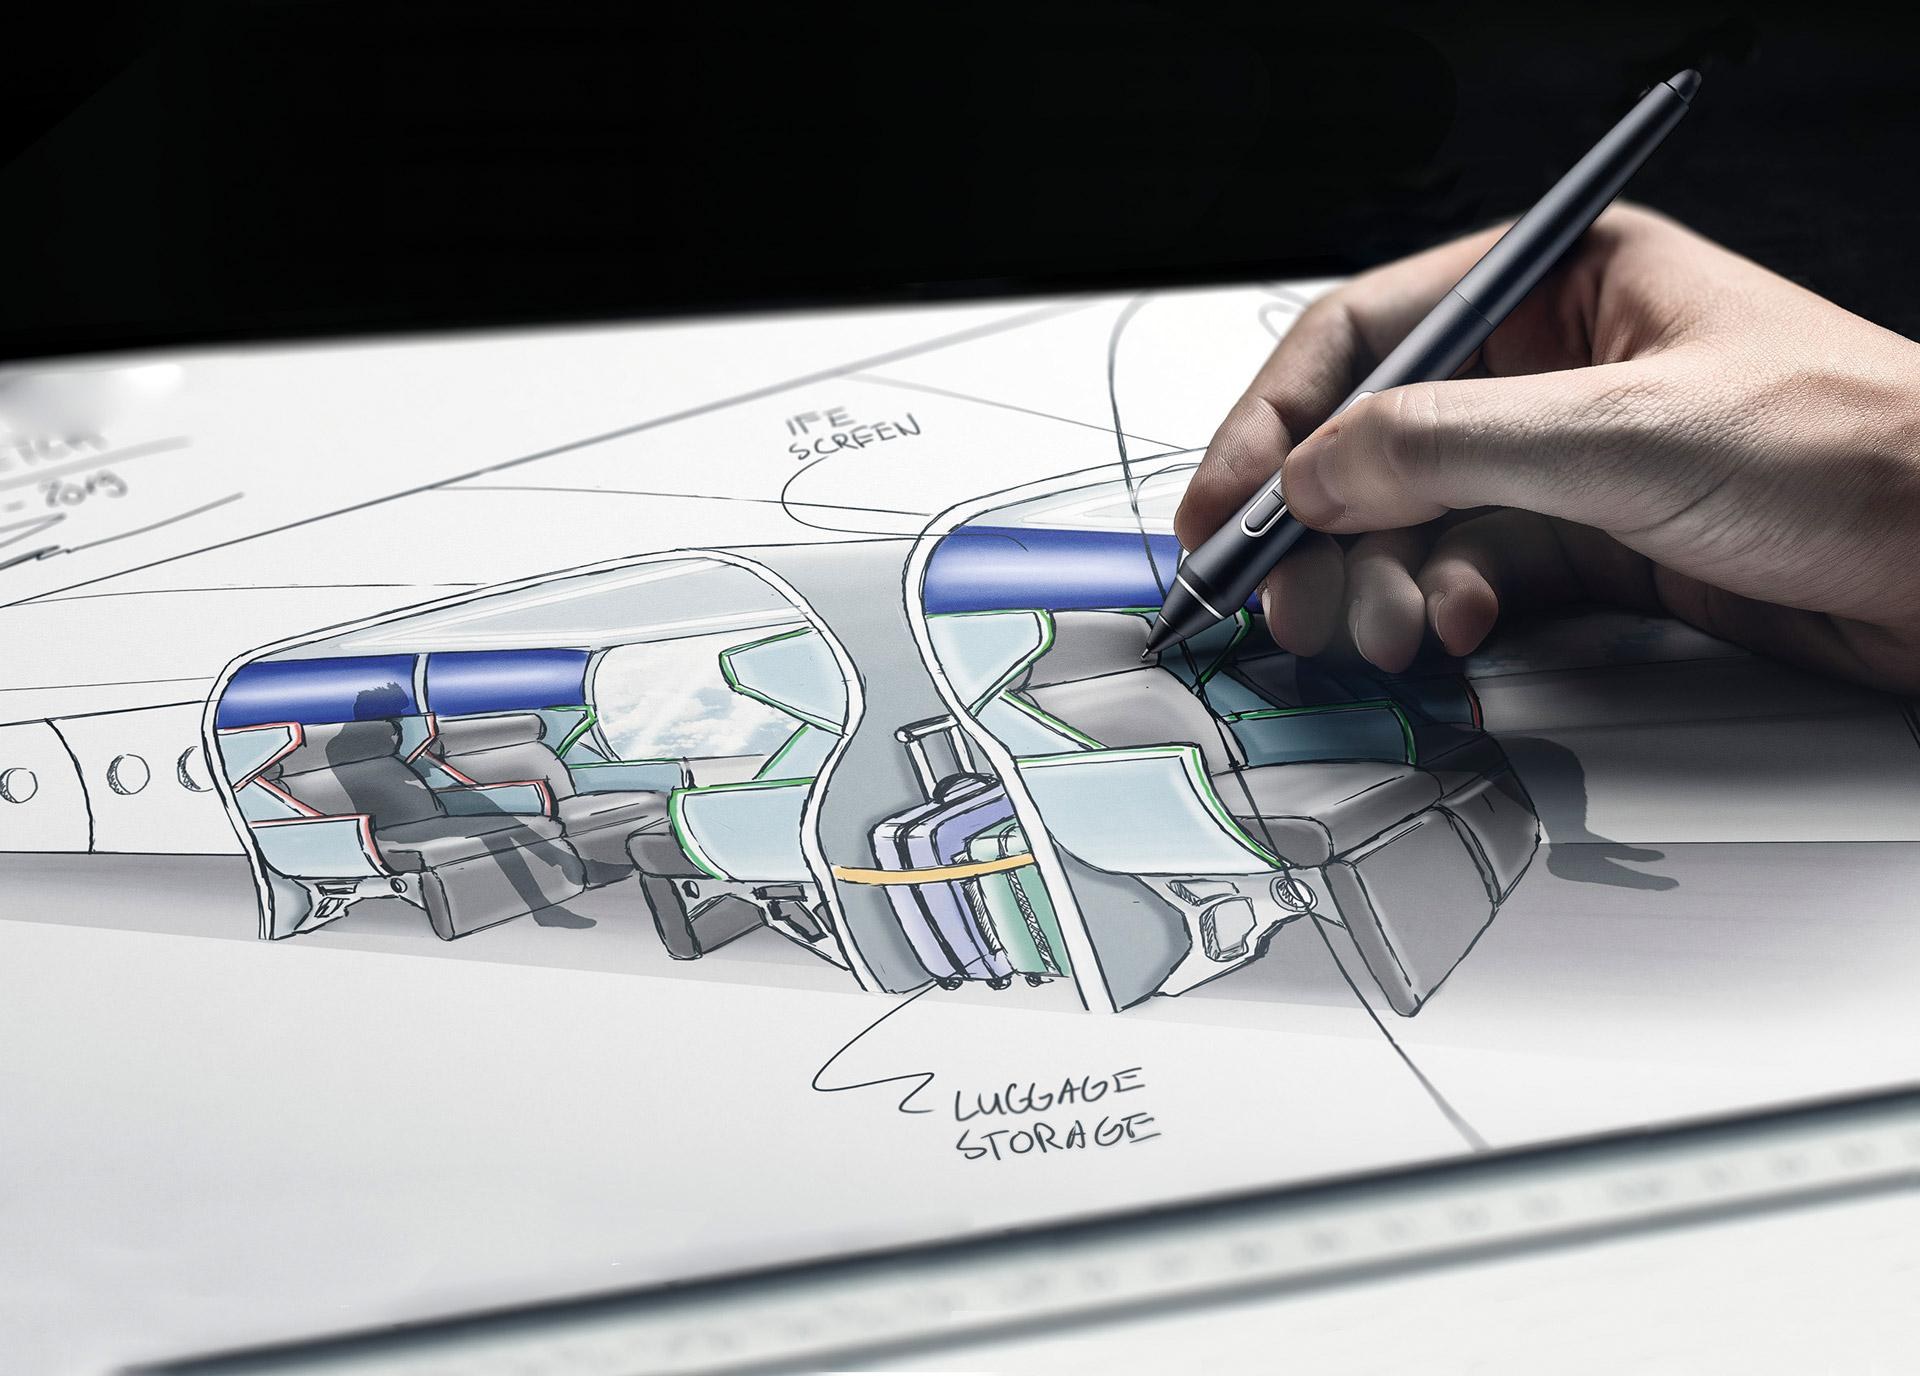 Digitale Handskizze des Flugzeuginnenraums